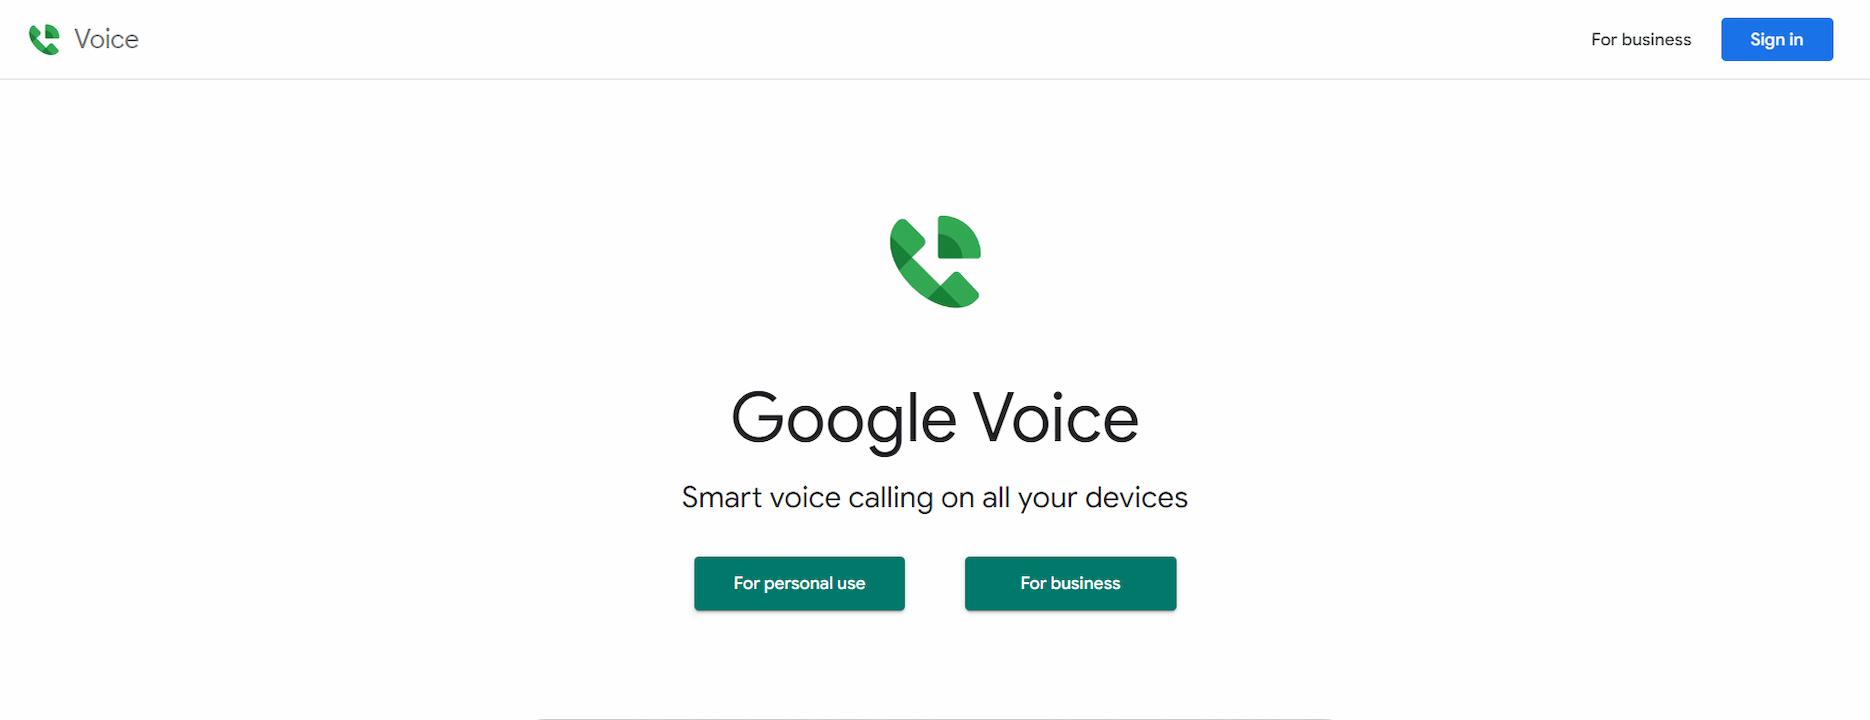 Google Voice best free solution